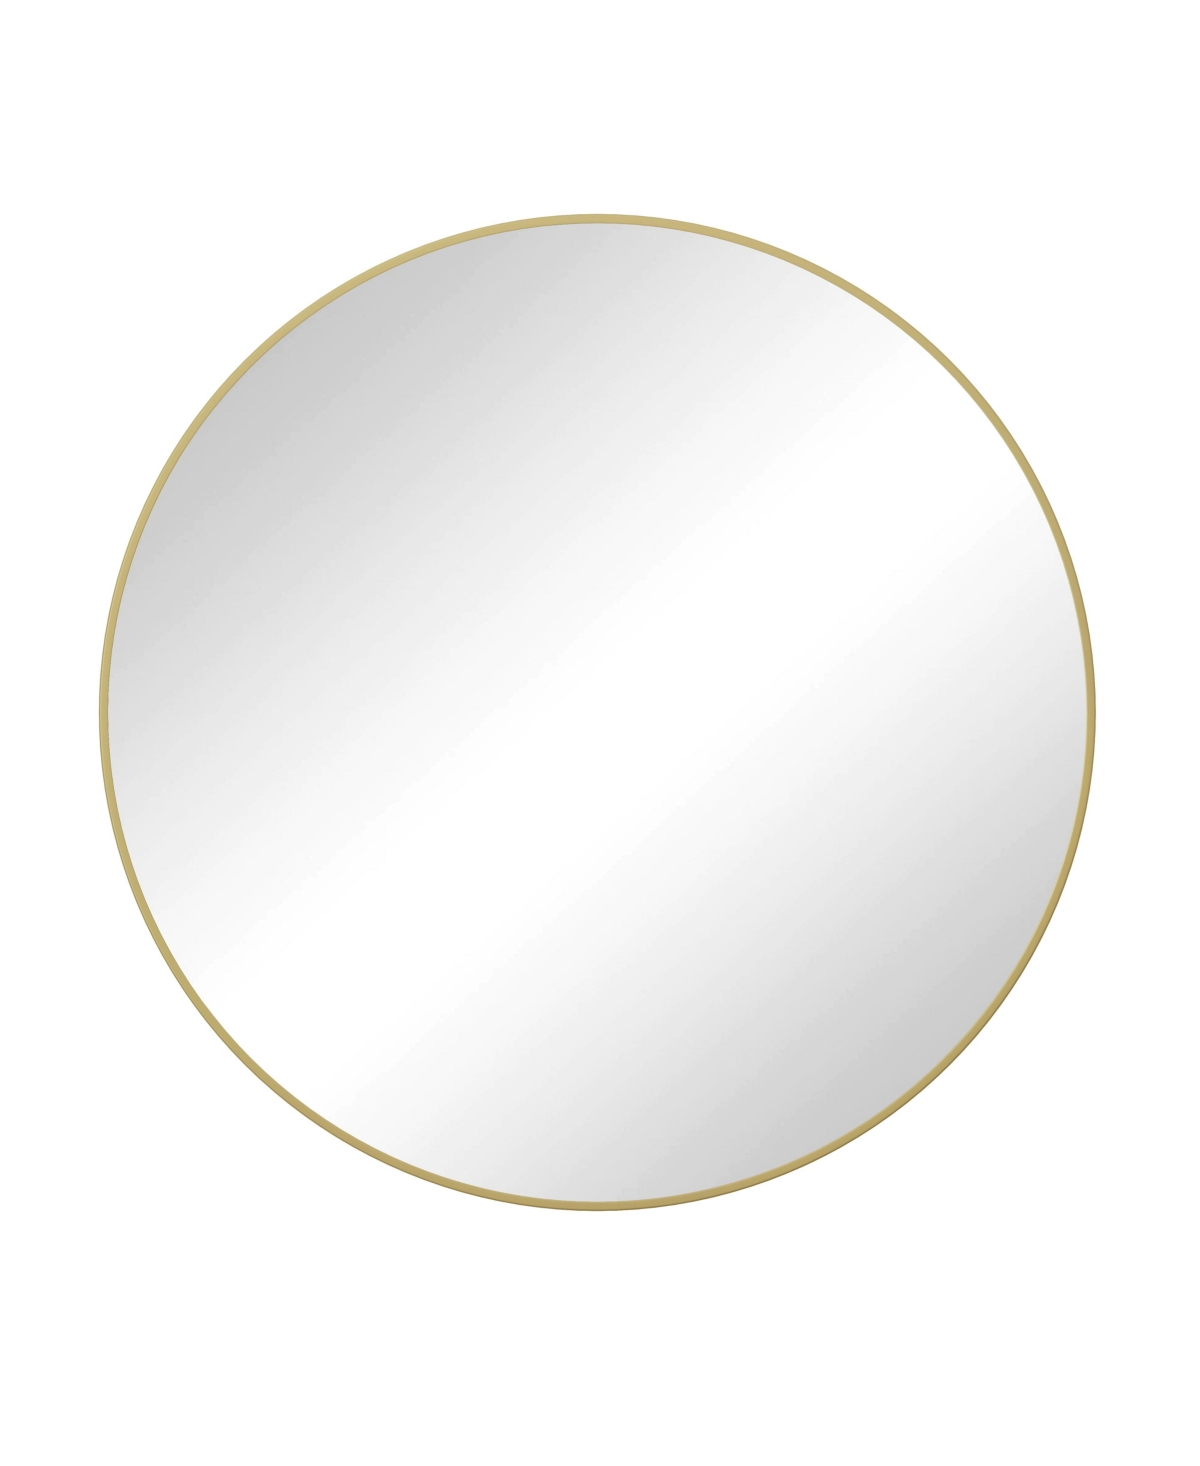 39" Gold Metal Framed Circular Wall Mirror - Gold